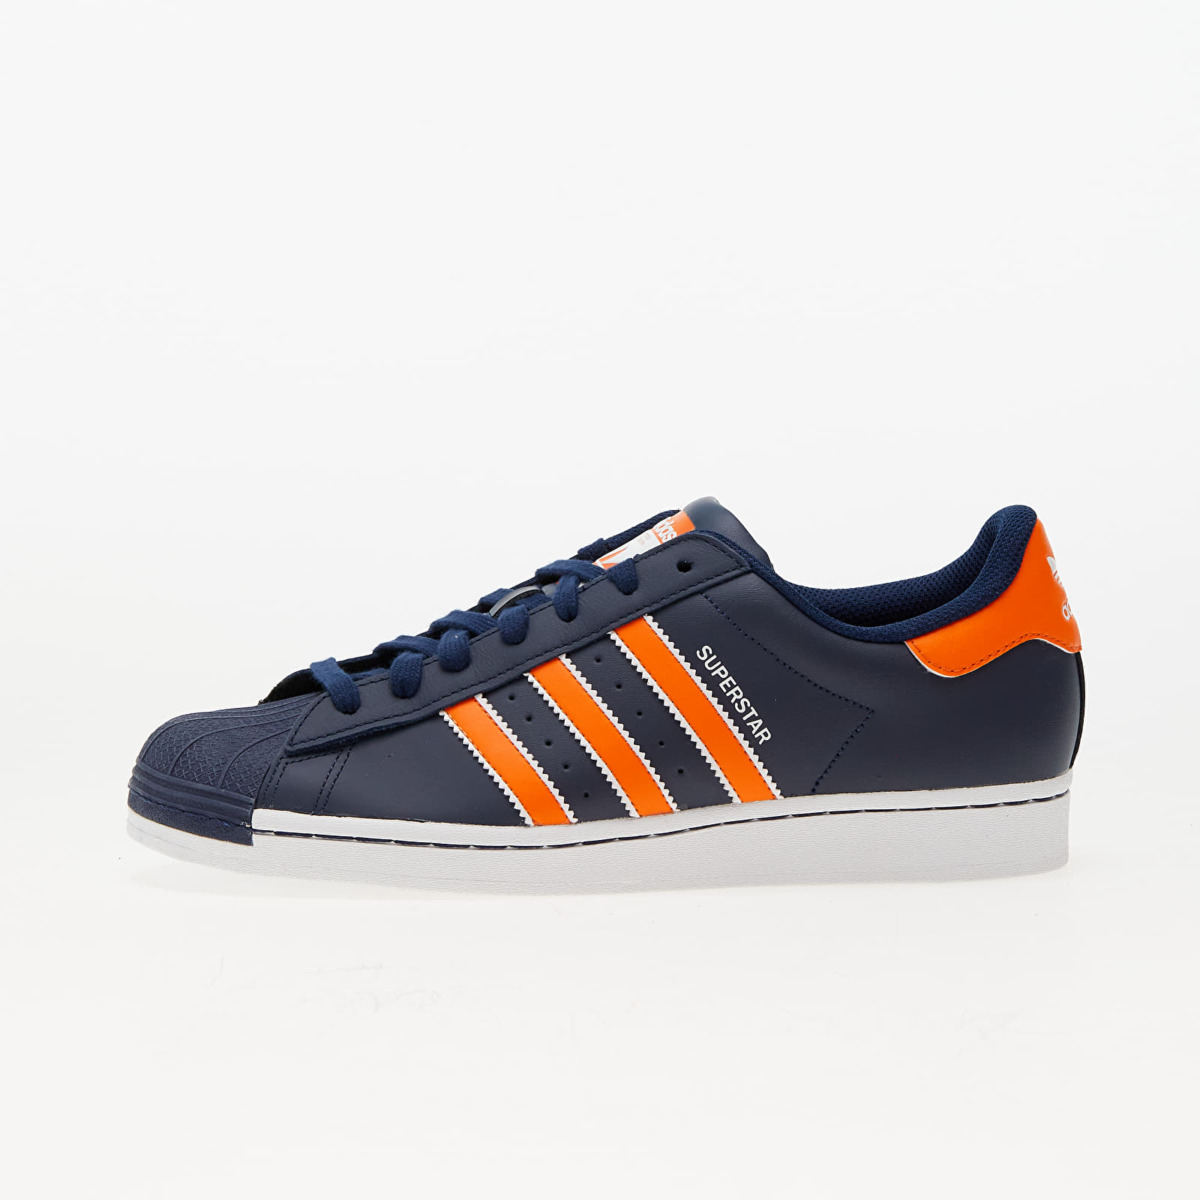 Orange - Superstars - Adidas - Gents - Footshop GOOFASH